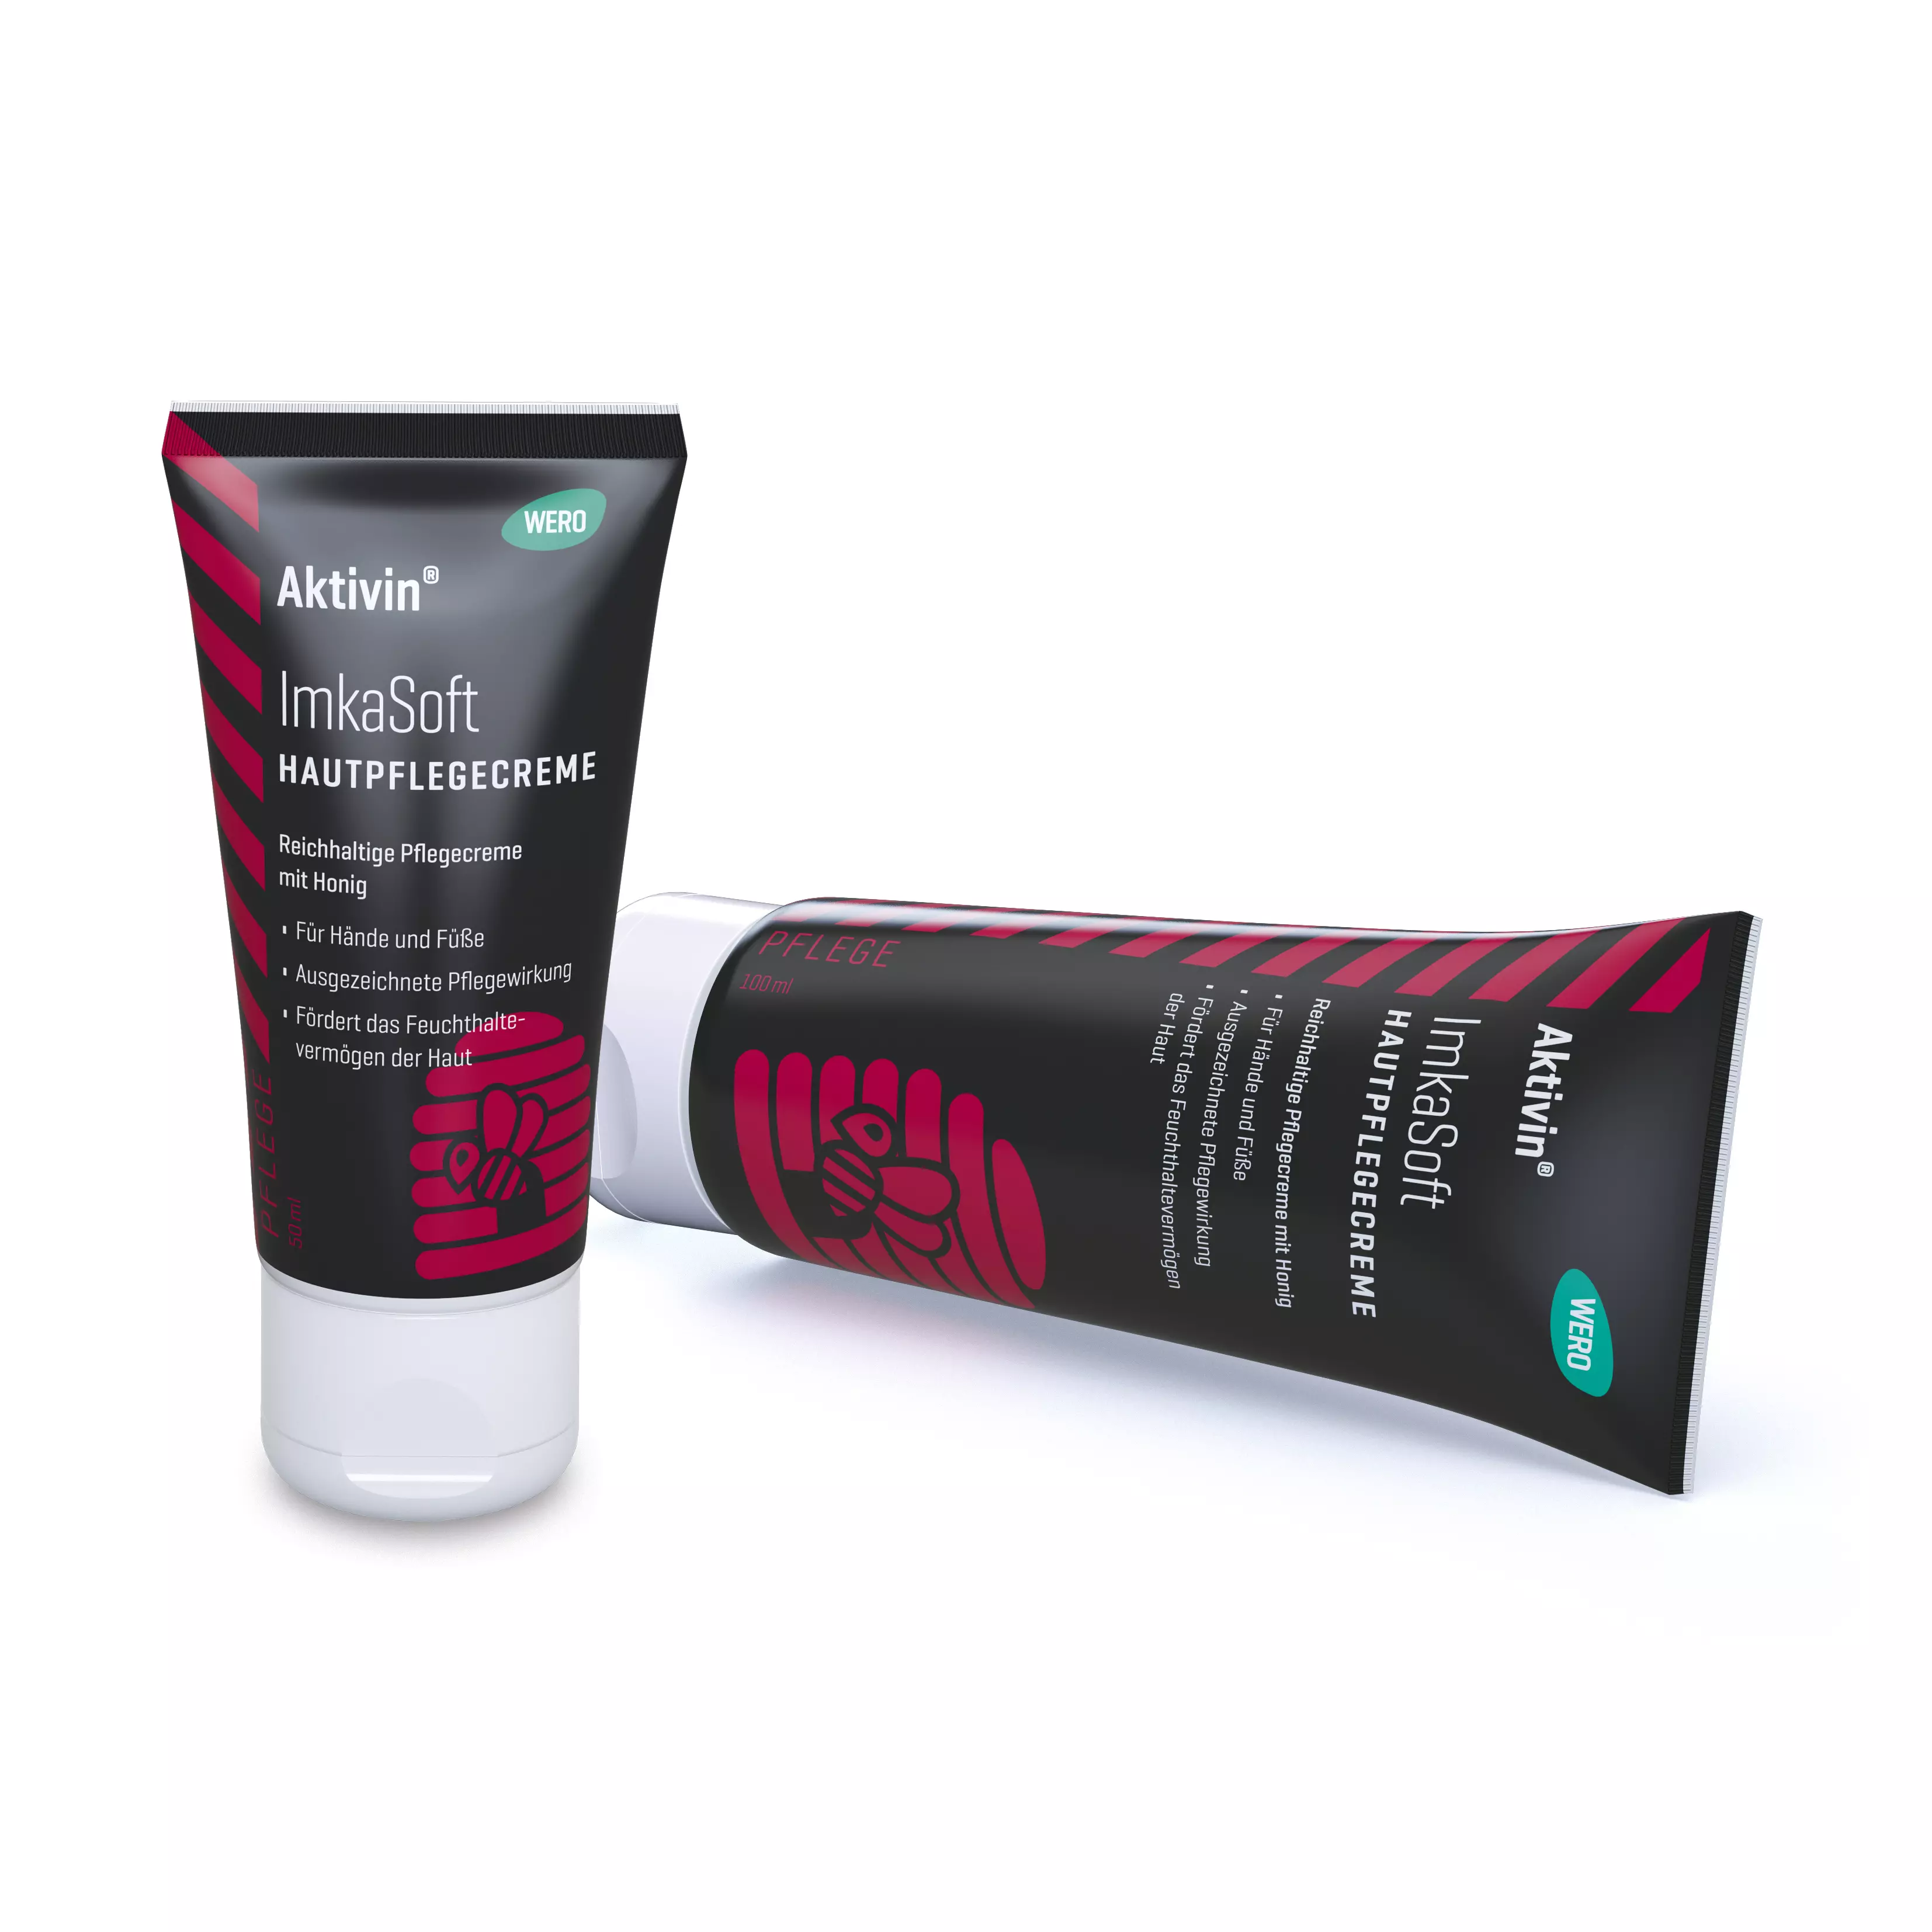 Aktivin® ImkaSoft skin care cream - 100 ml